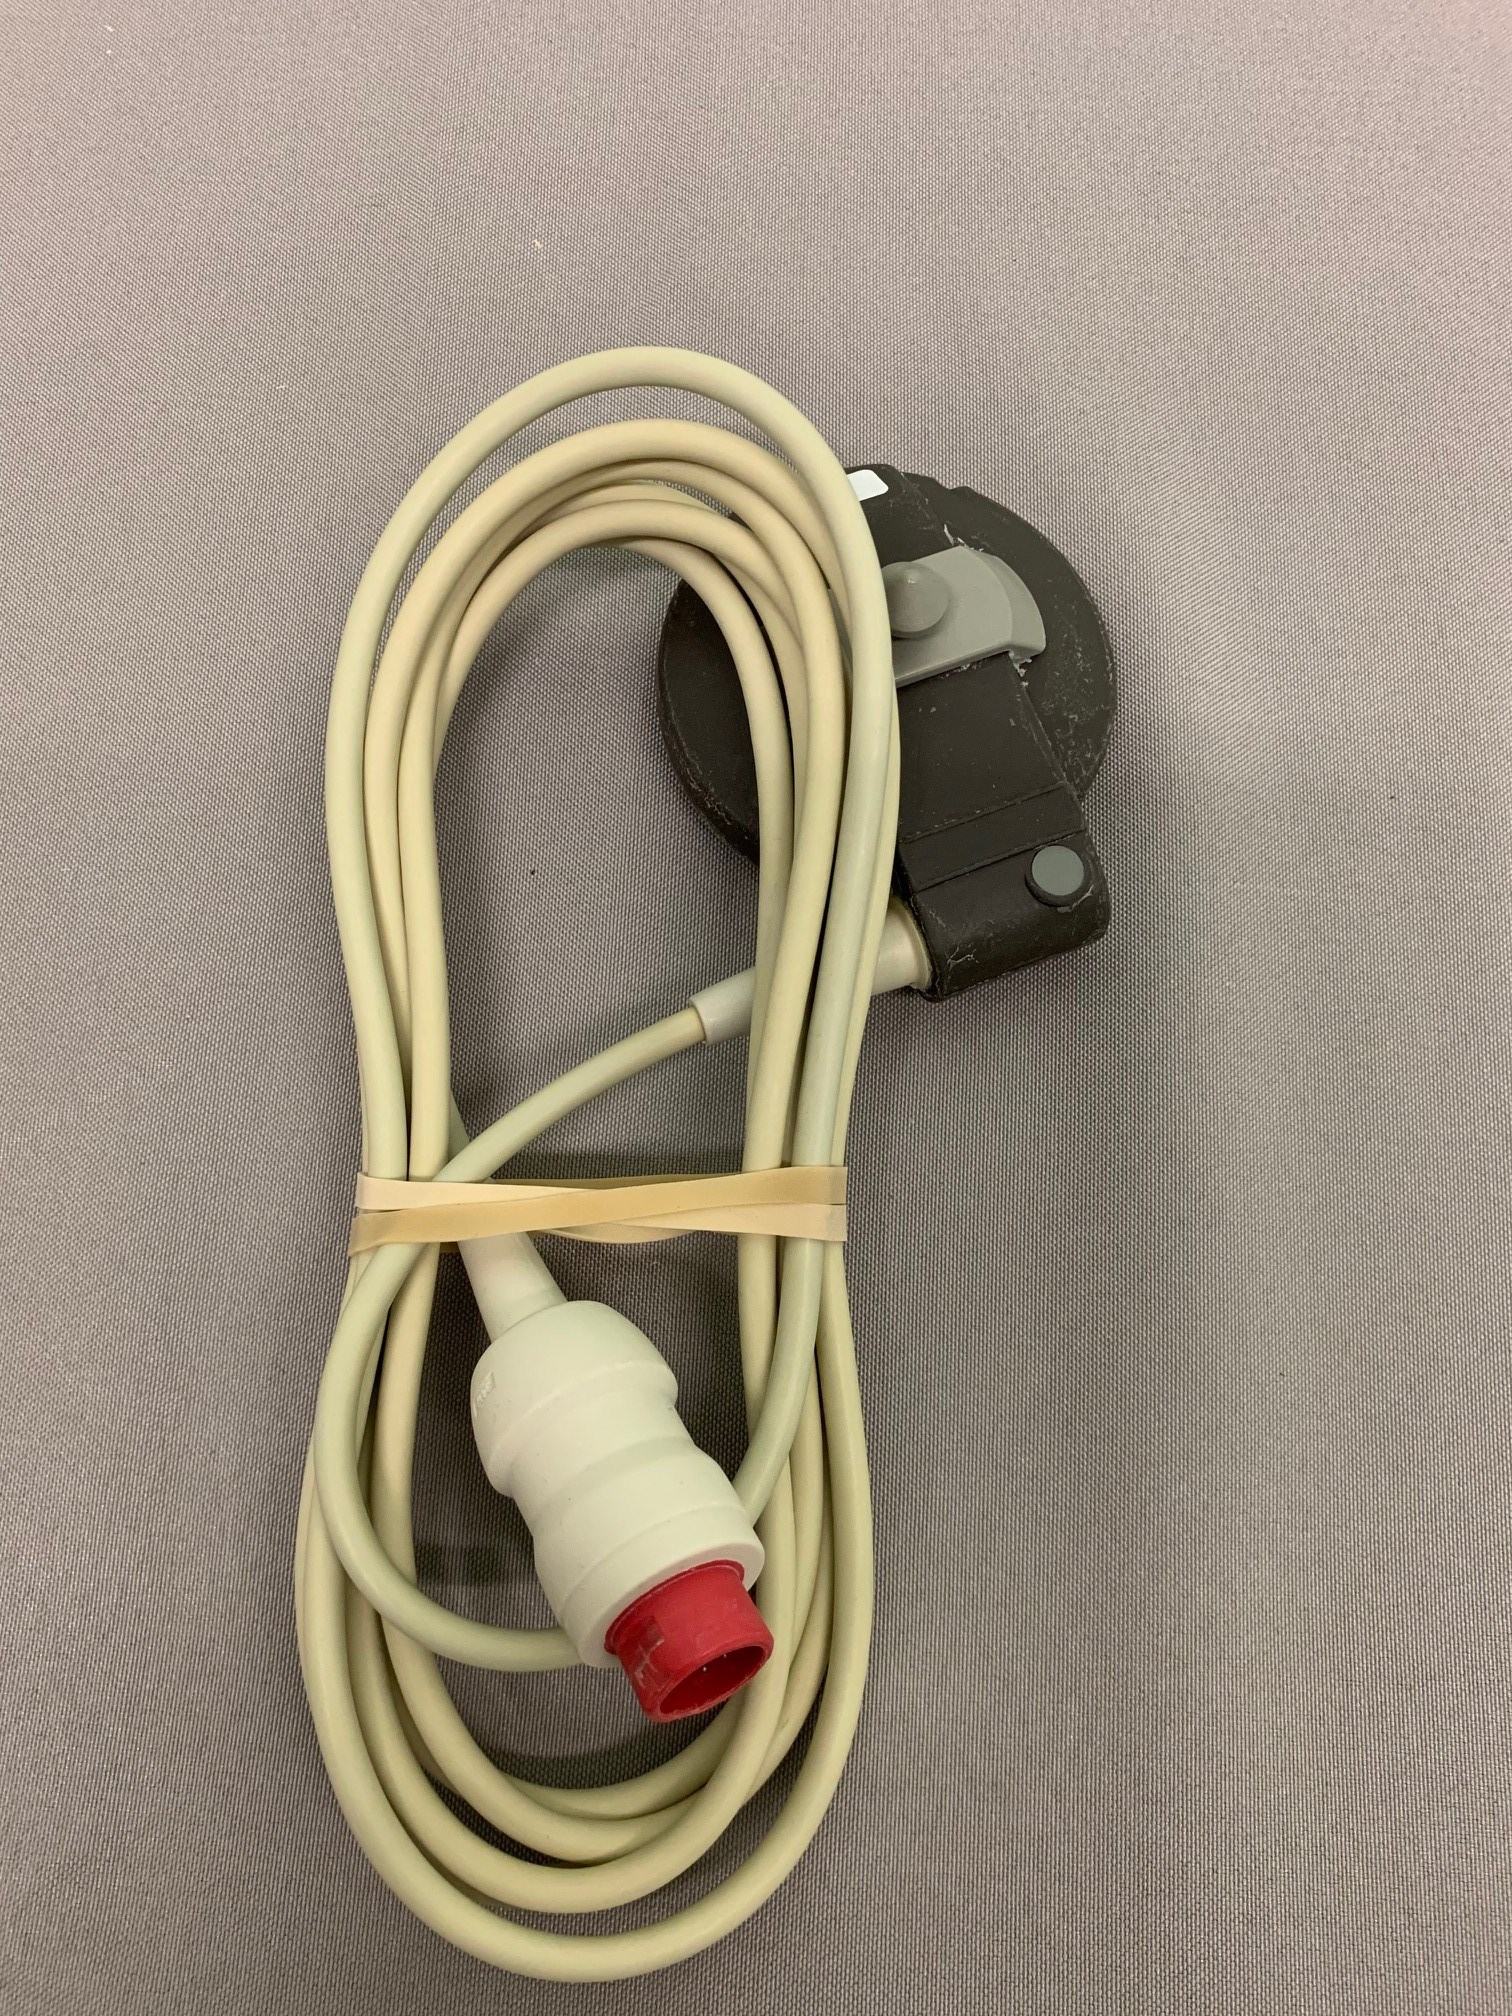 OTHER Neonatal Ultrasound Transducer - REF: FM10835